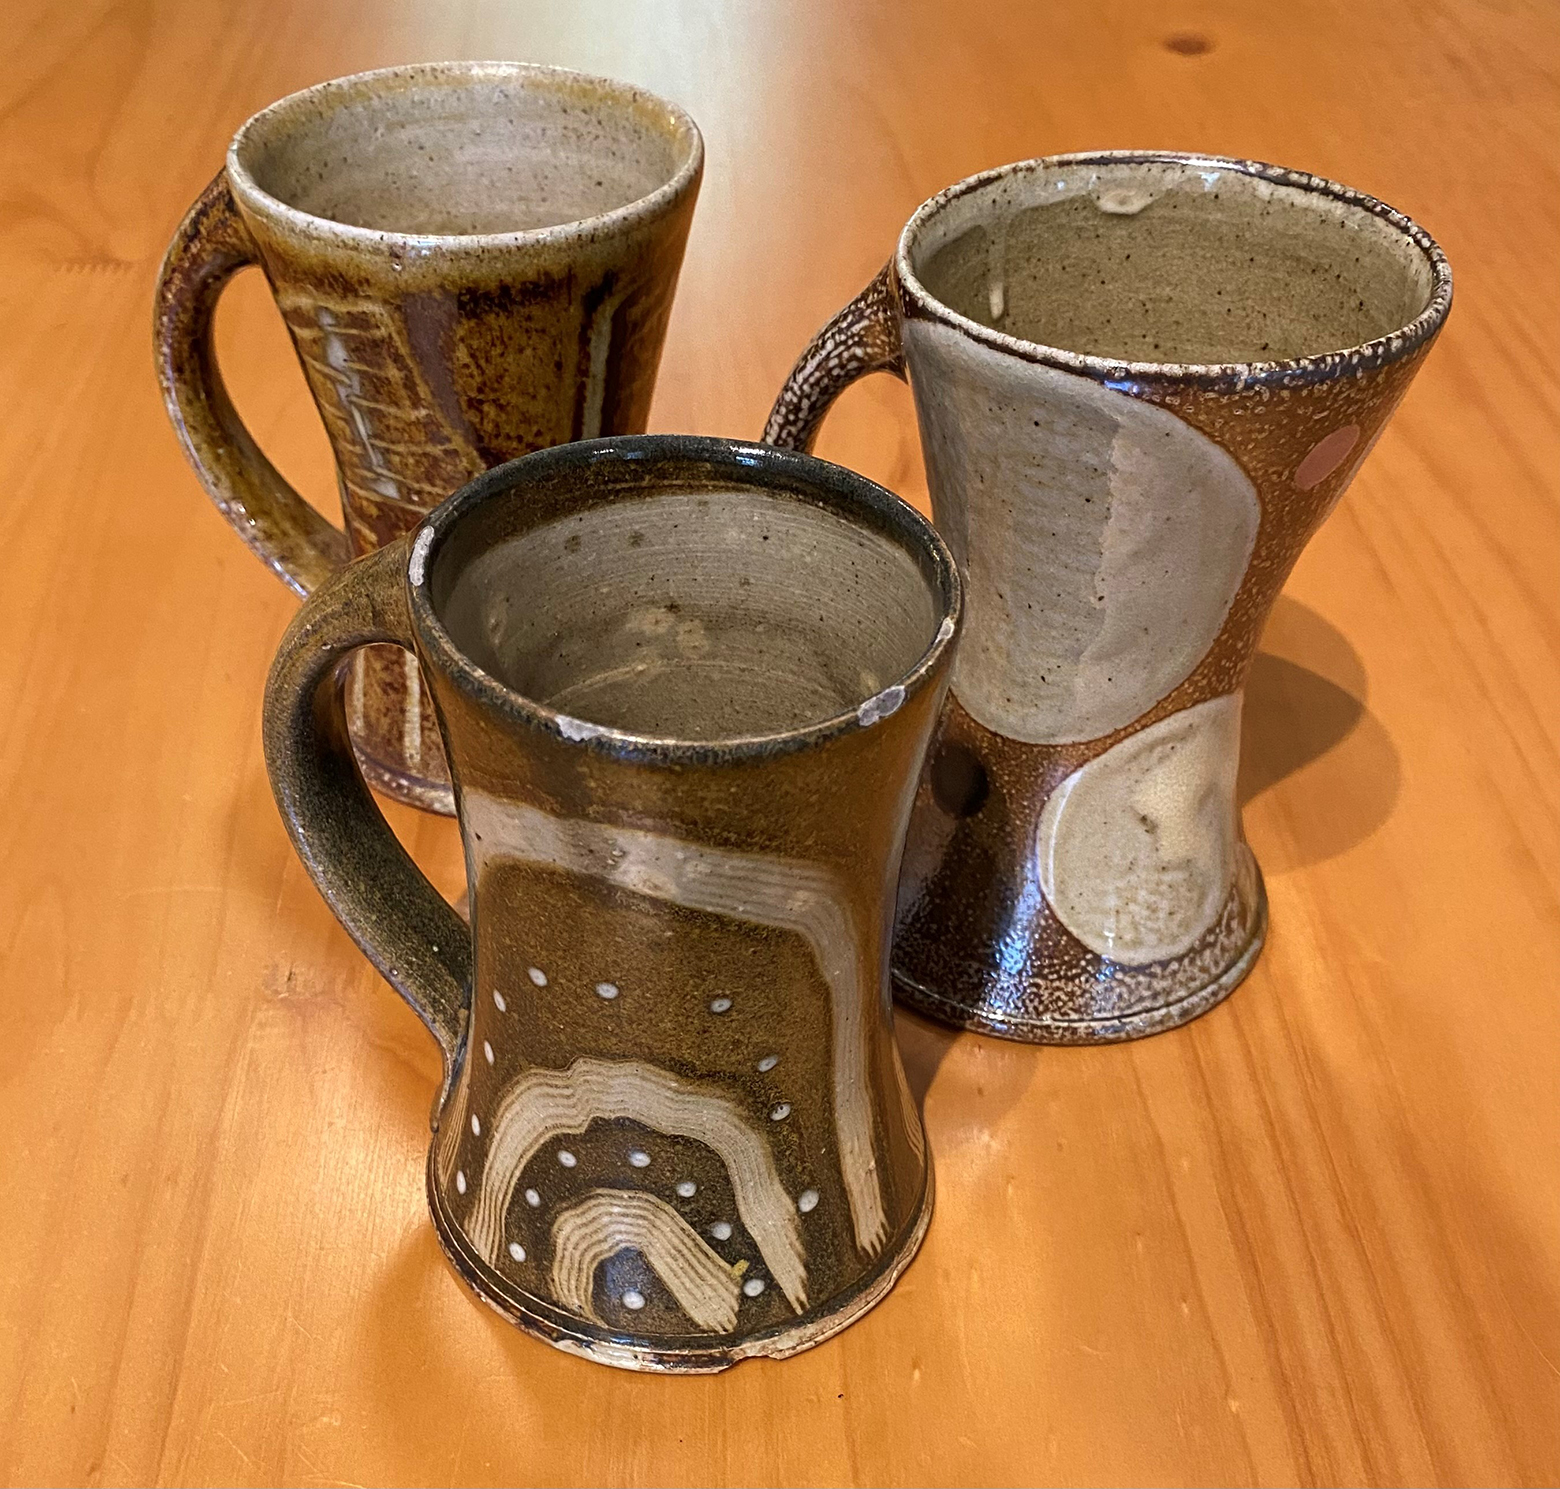 Three coffee mugs on a table.